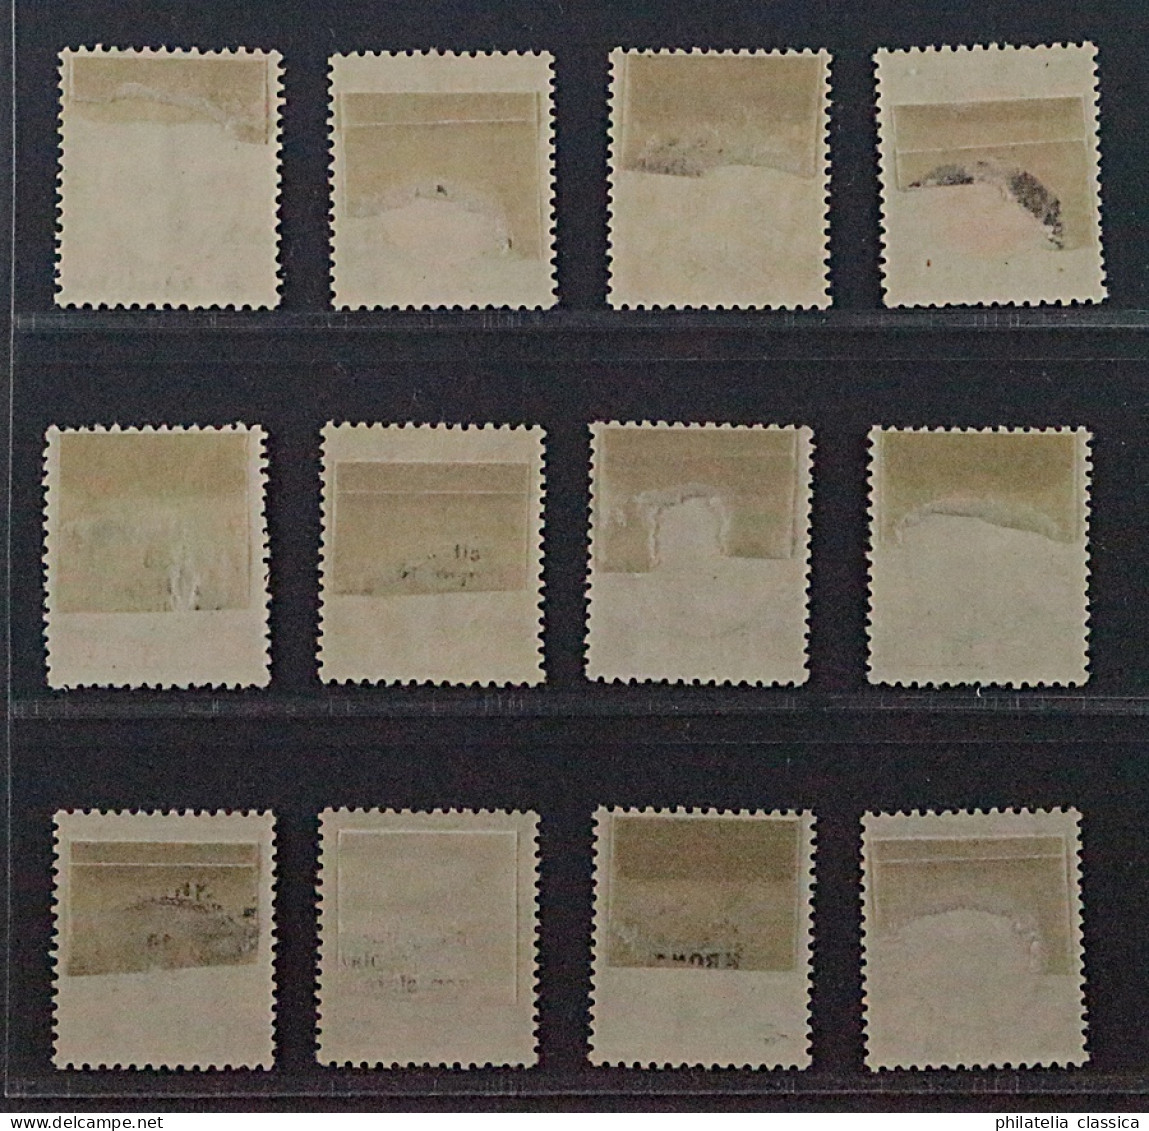 1931, ISLAND 156-67 König Christian, 1 E.-10 Kr. Komplett, Originalgumm 2600,-€ - Nuovi